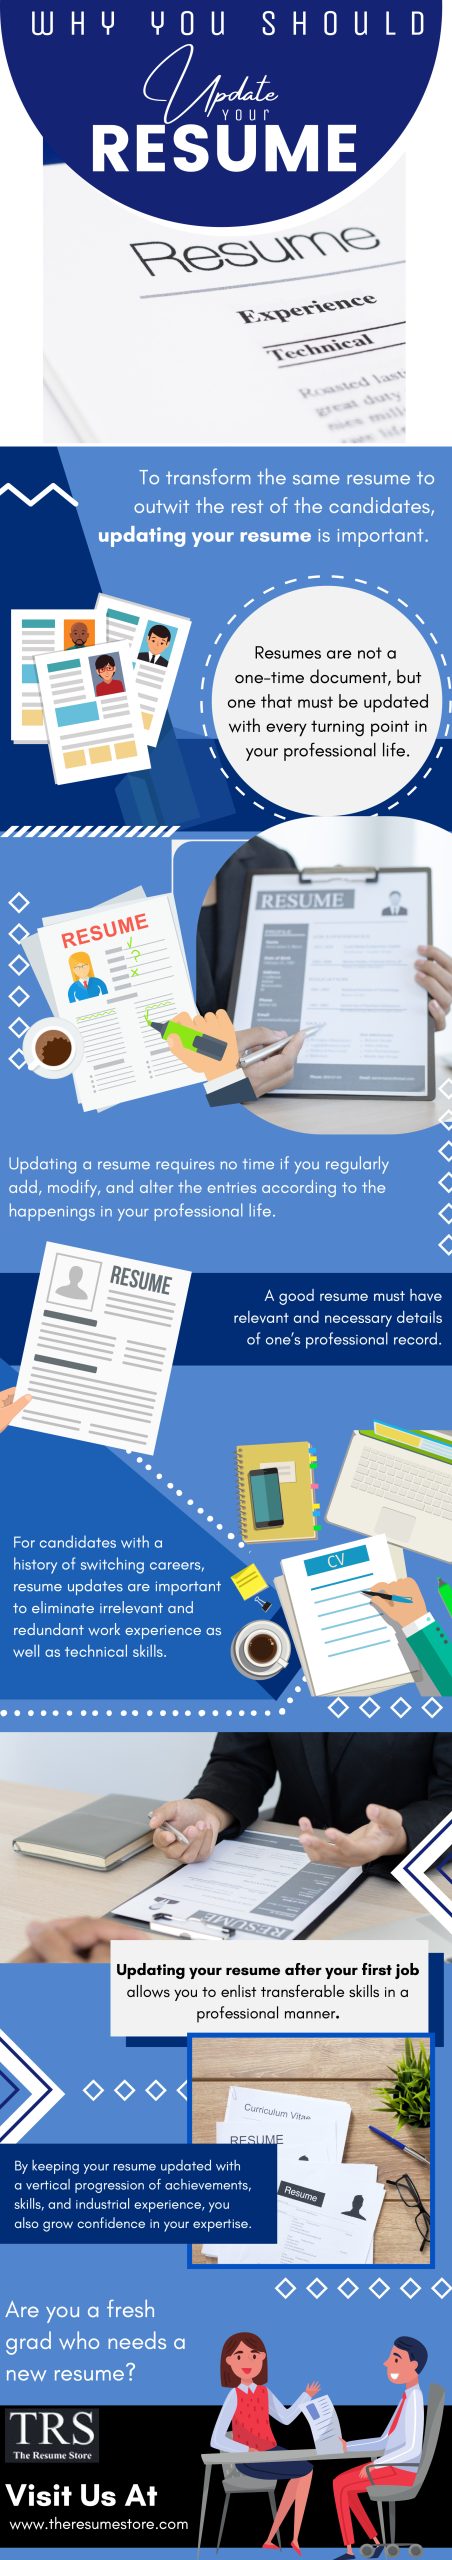 Update Your Resume